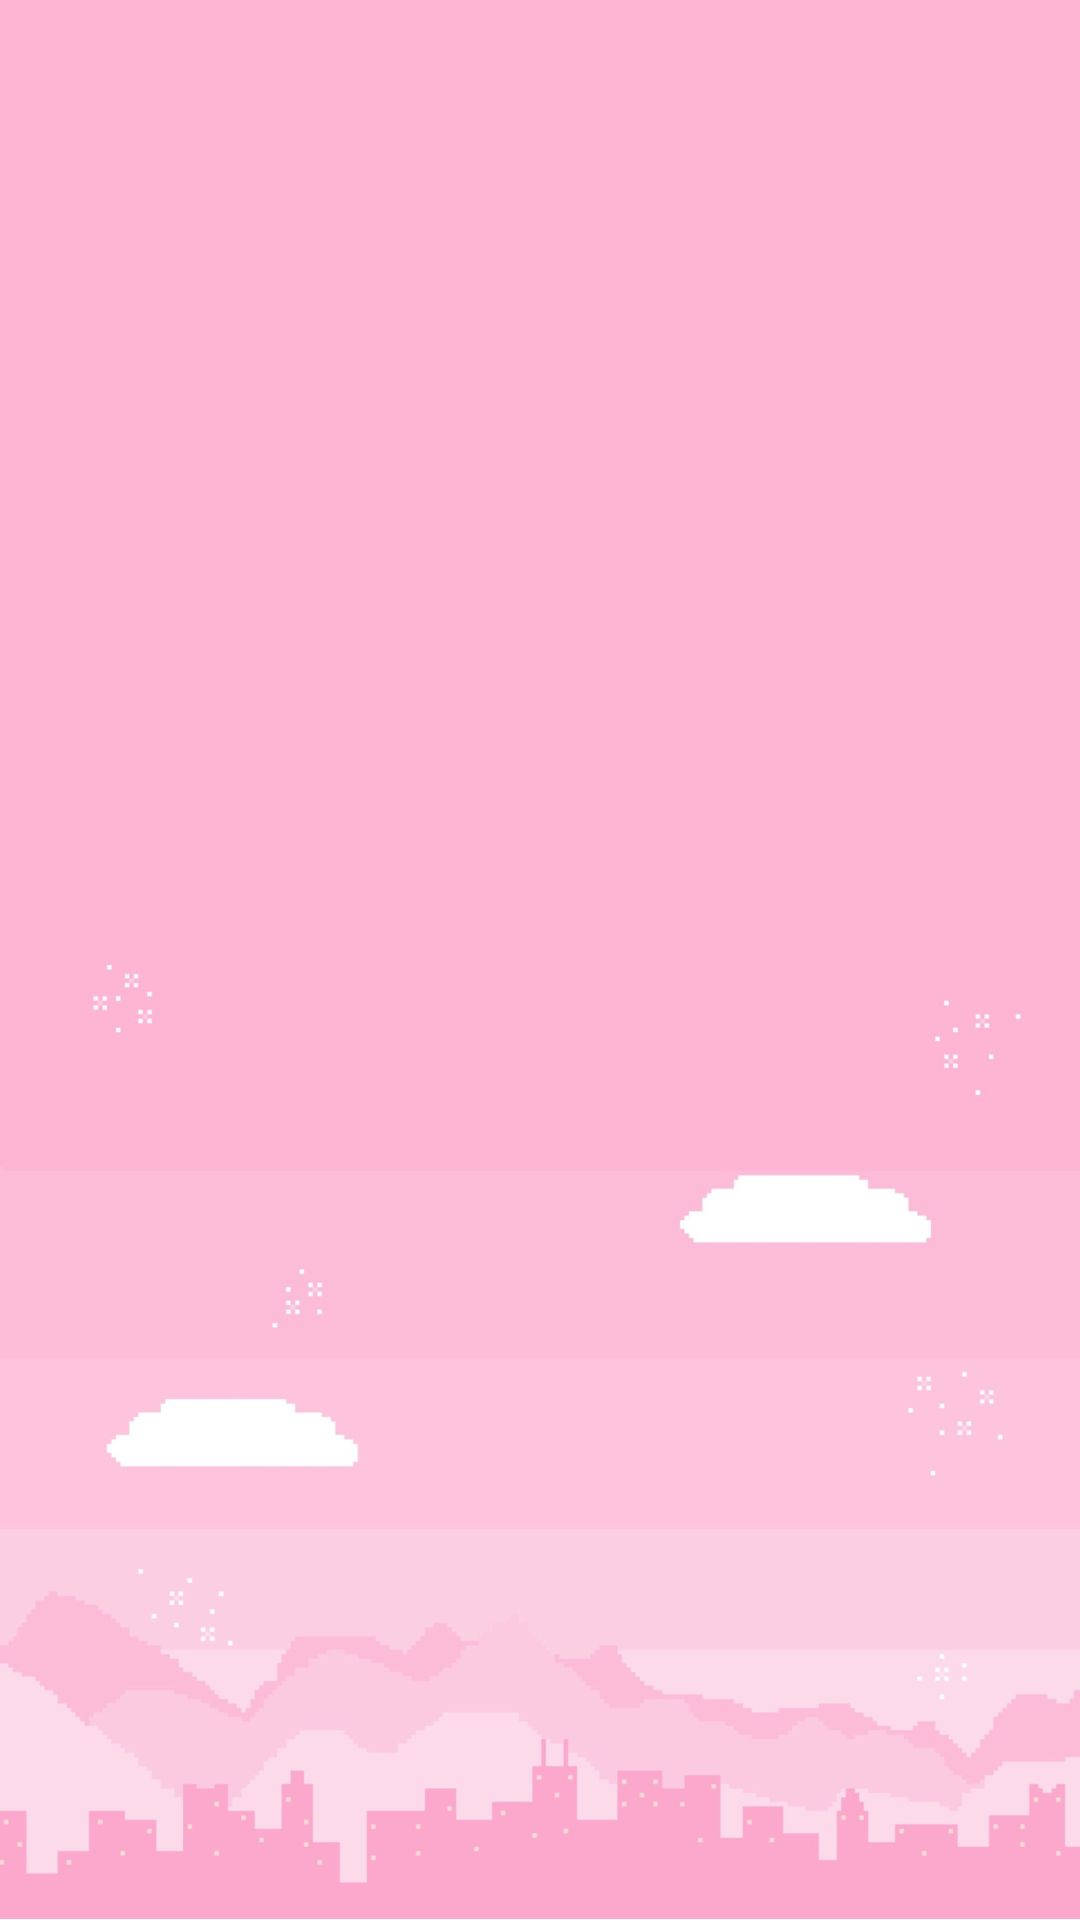 Aesthetic Pink Sky Wallpaper